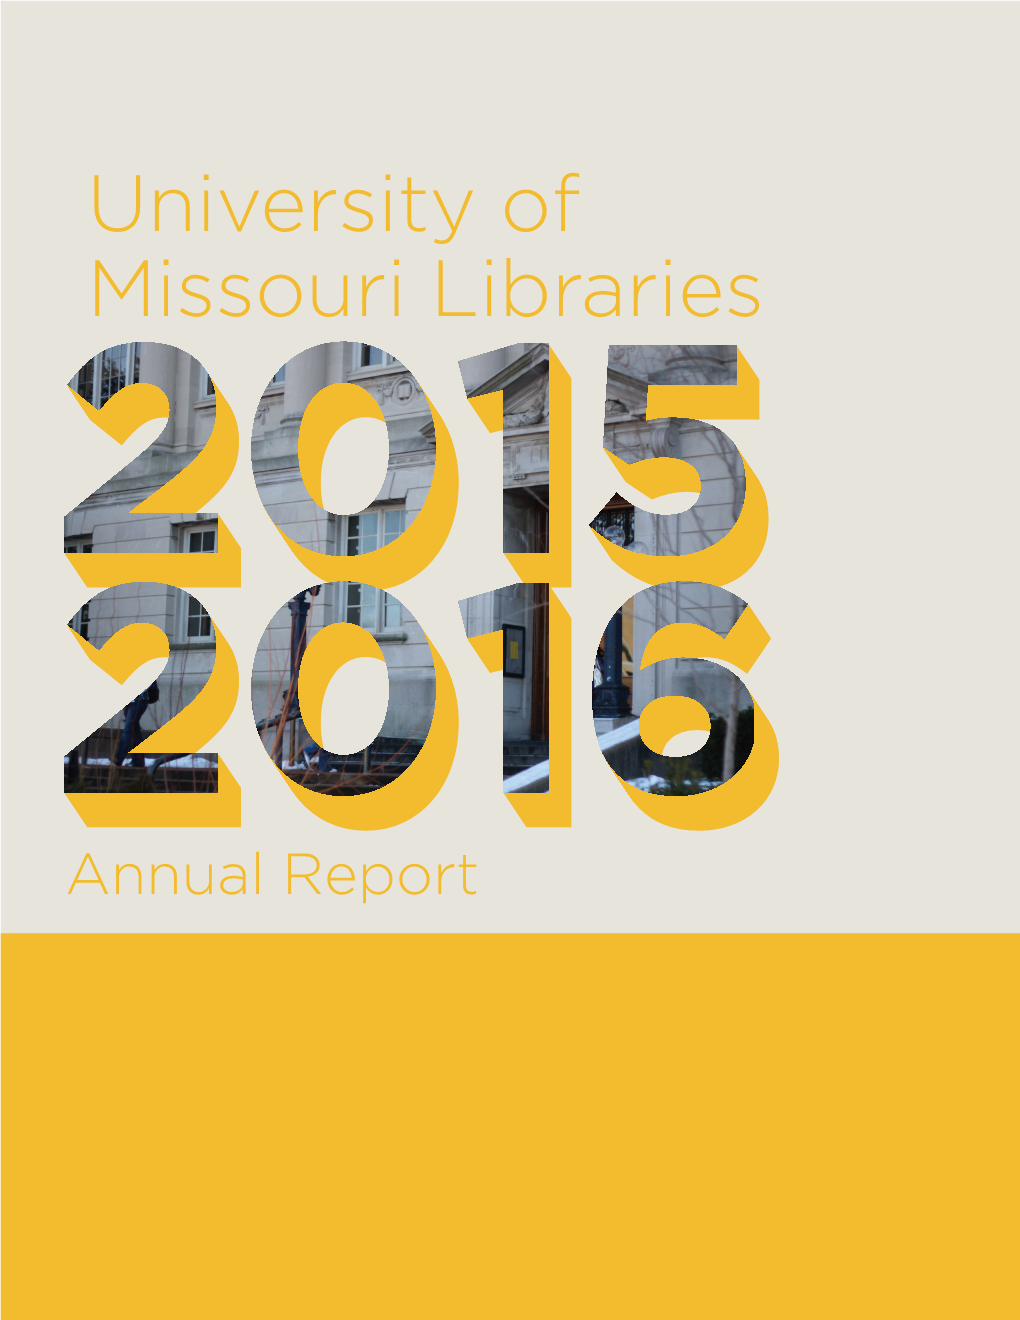 University of Missouri Libraries Annual Report 2015-2016